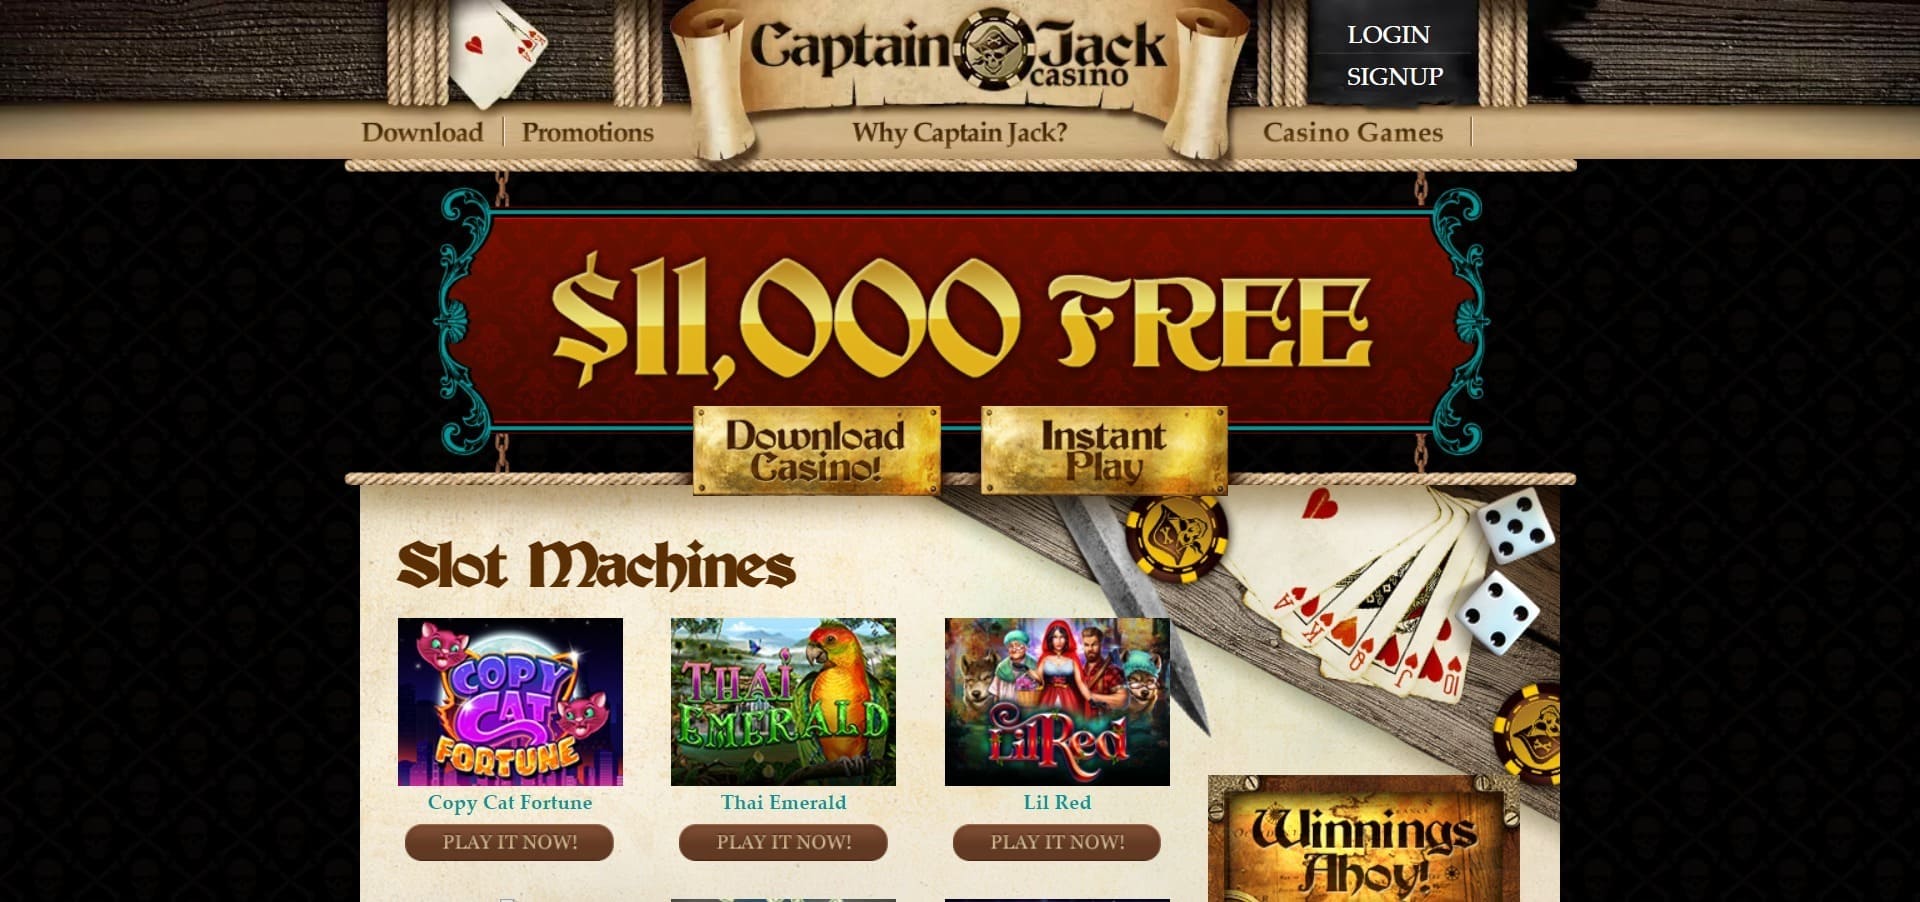 Captain Jack Casino slot machines